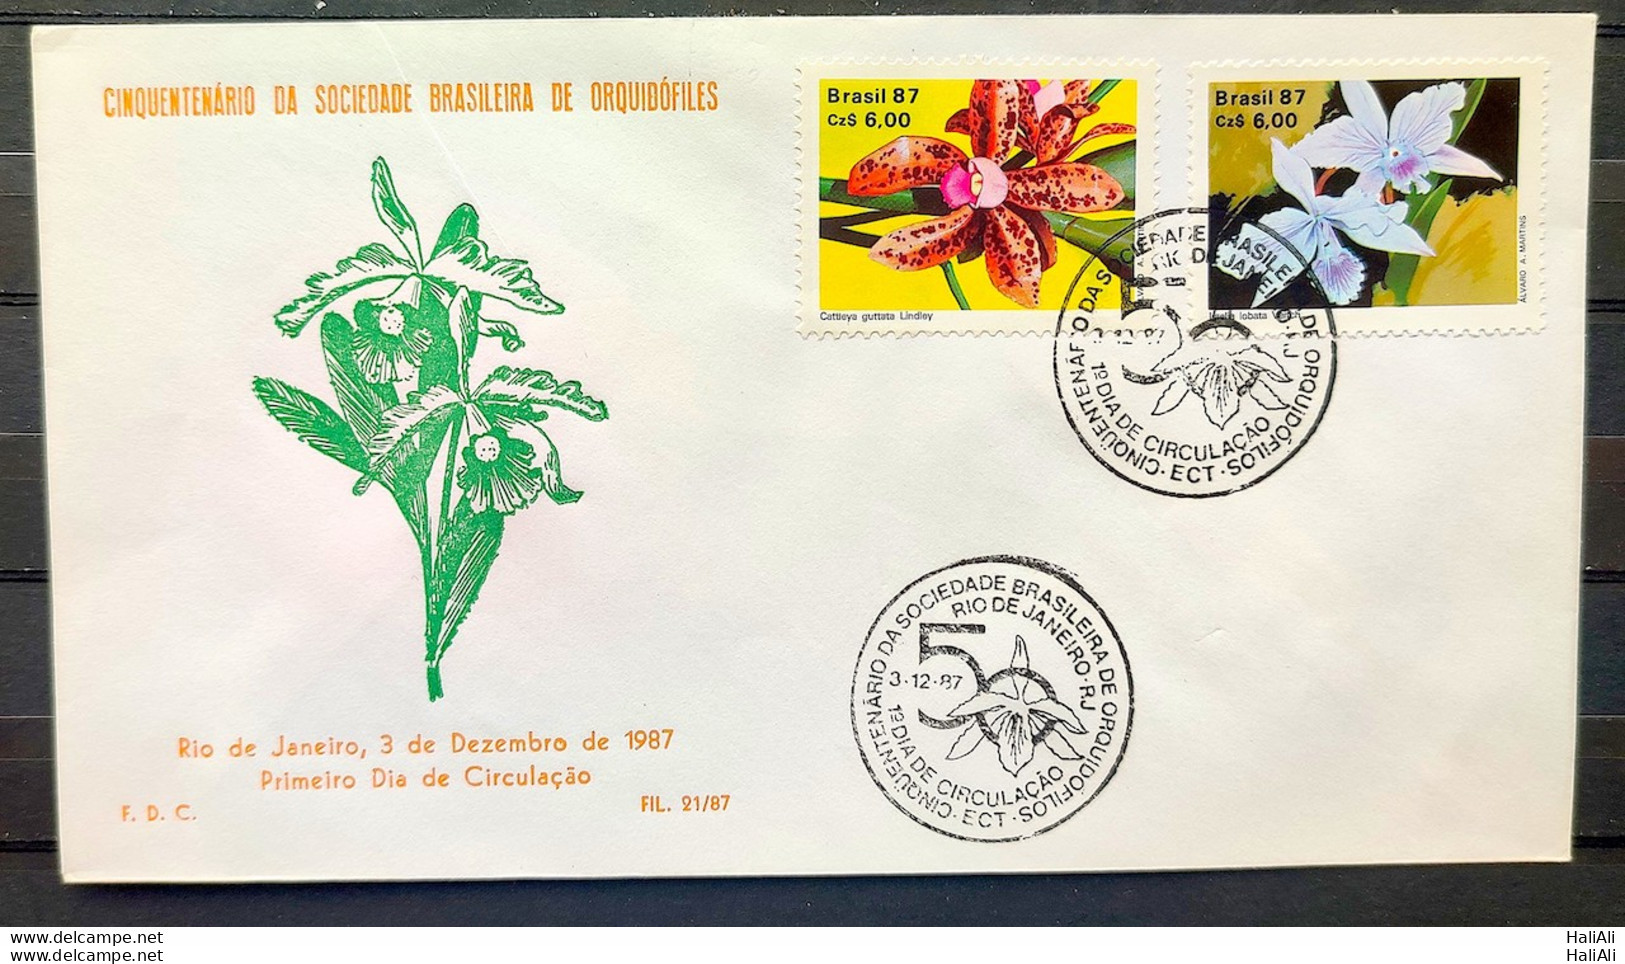 Brazil Envelope PVT FIL 021 1987 Flora Orquidea CBC RJ - FDC